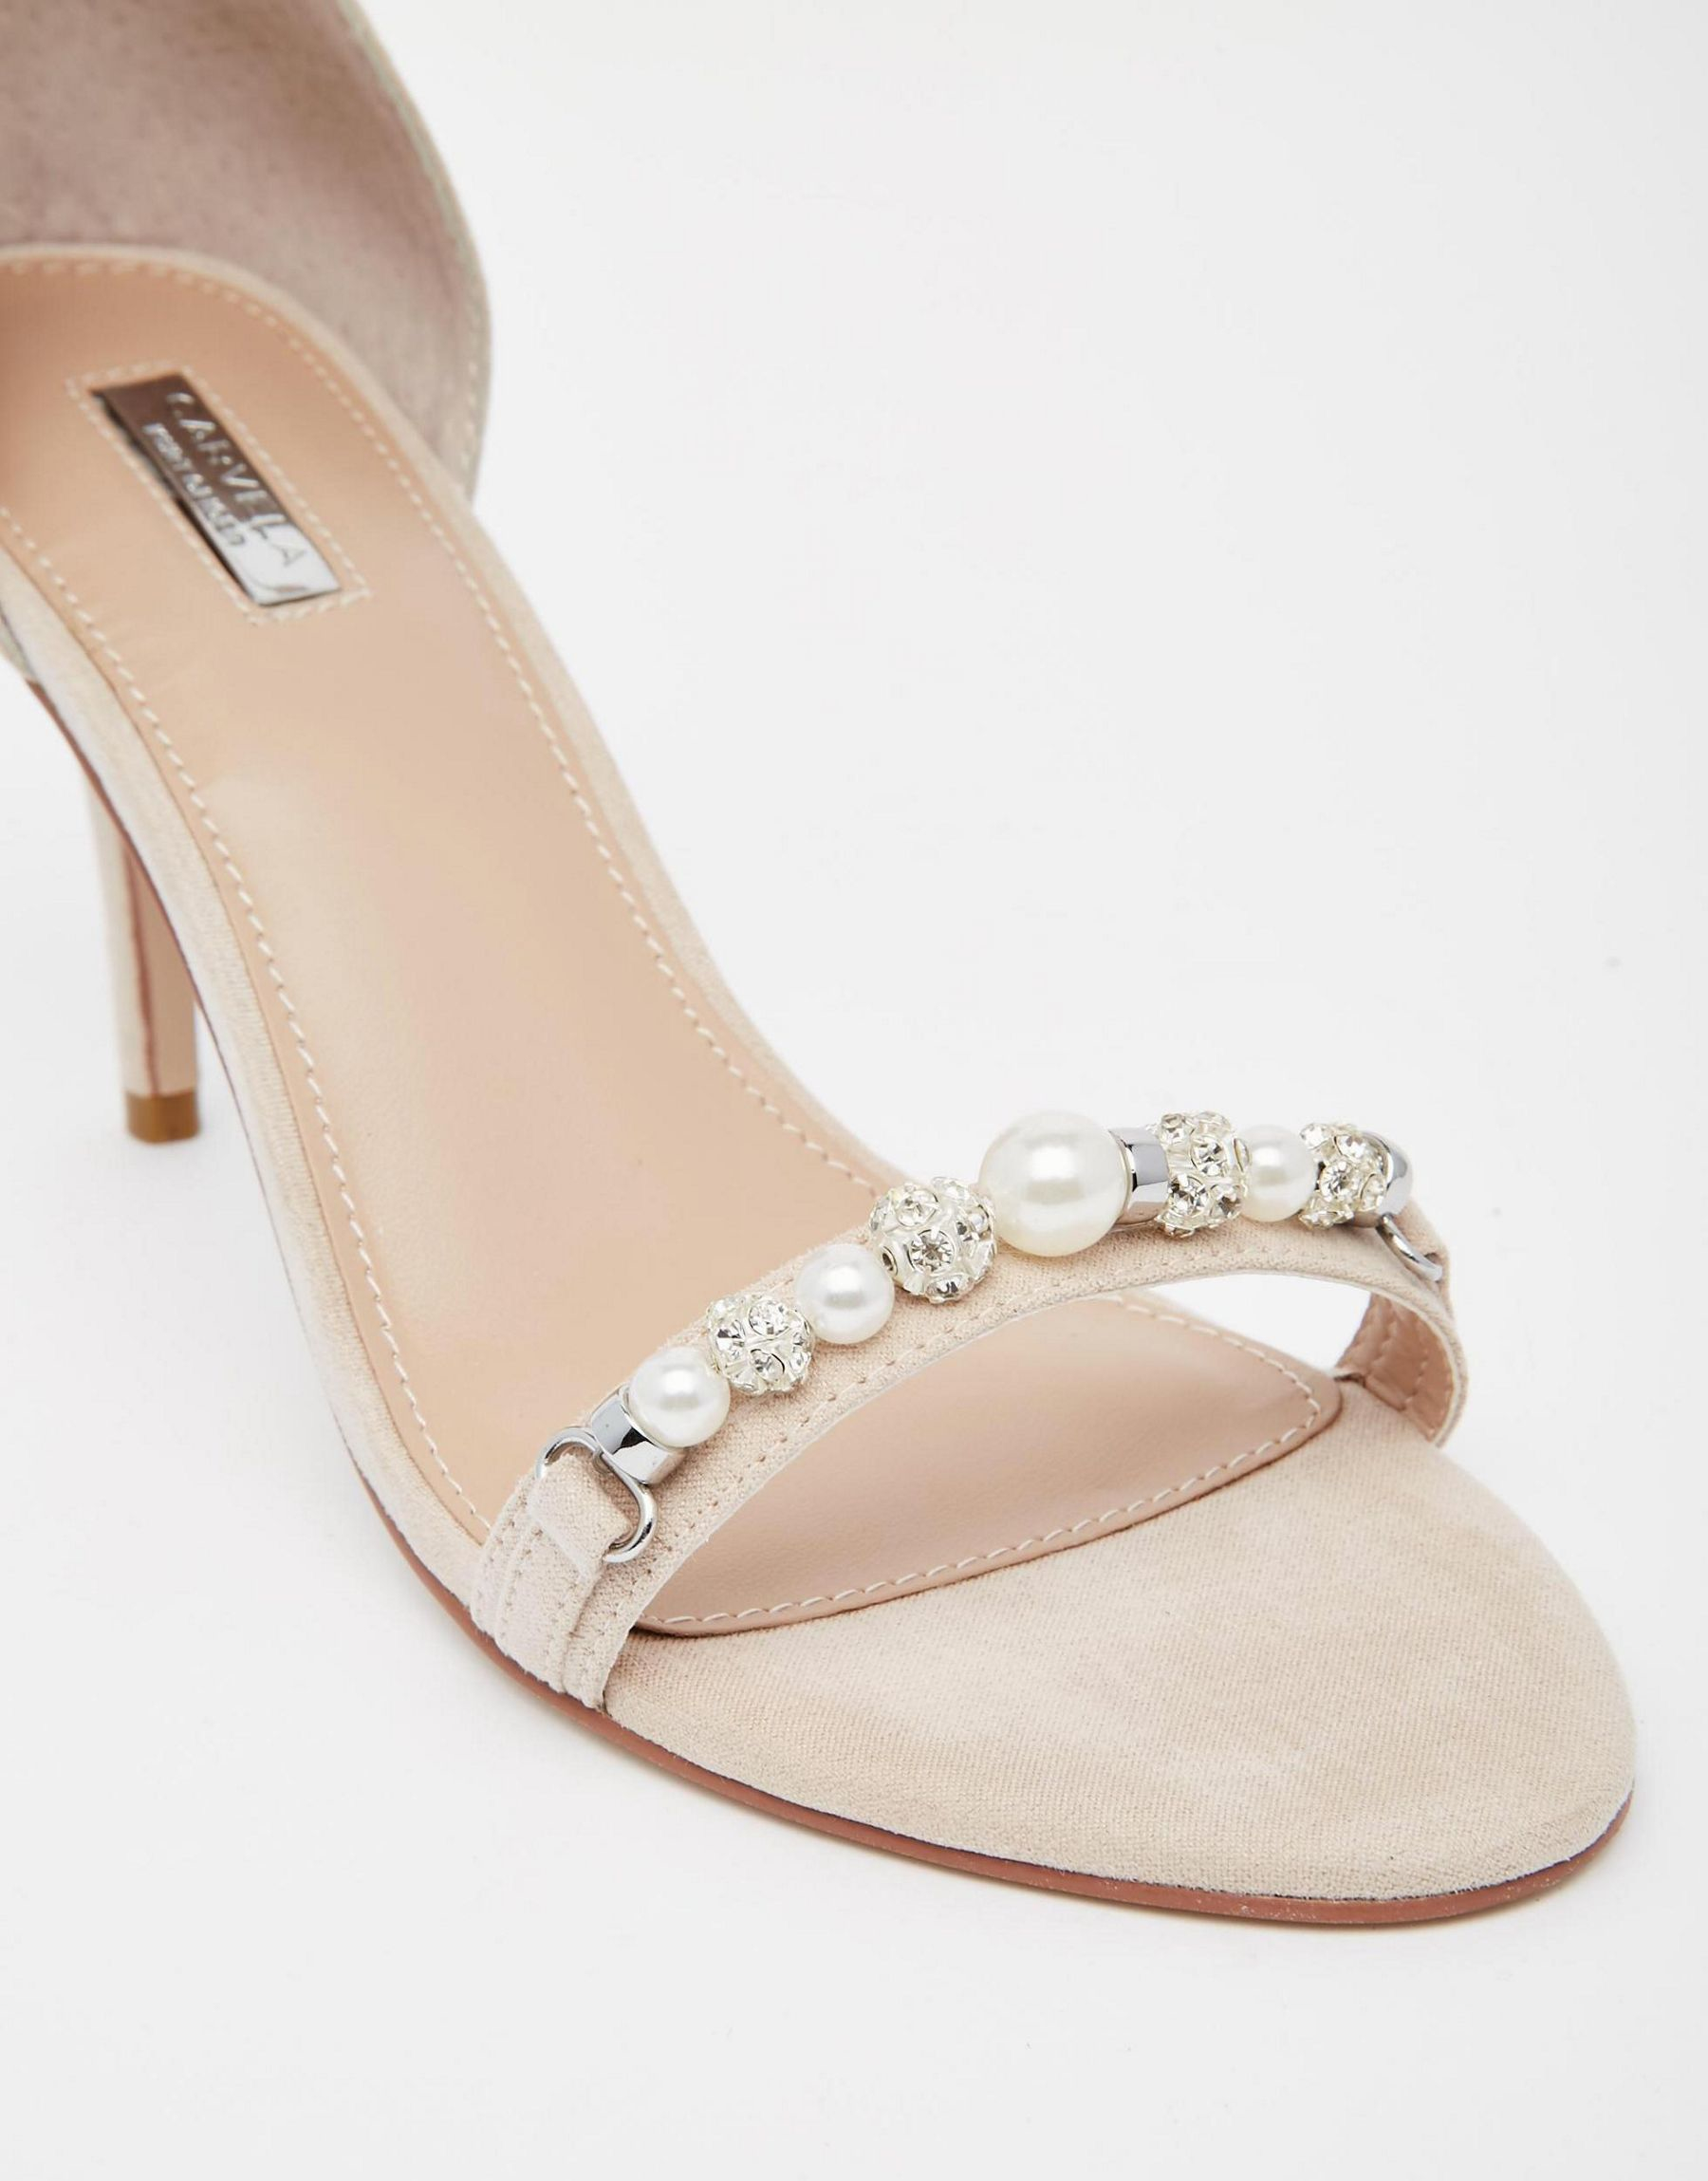 embellished mid heels